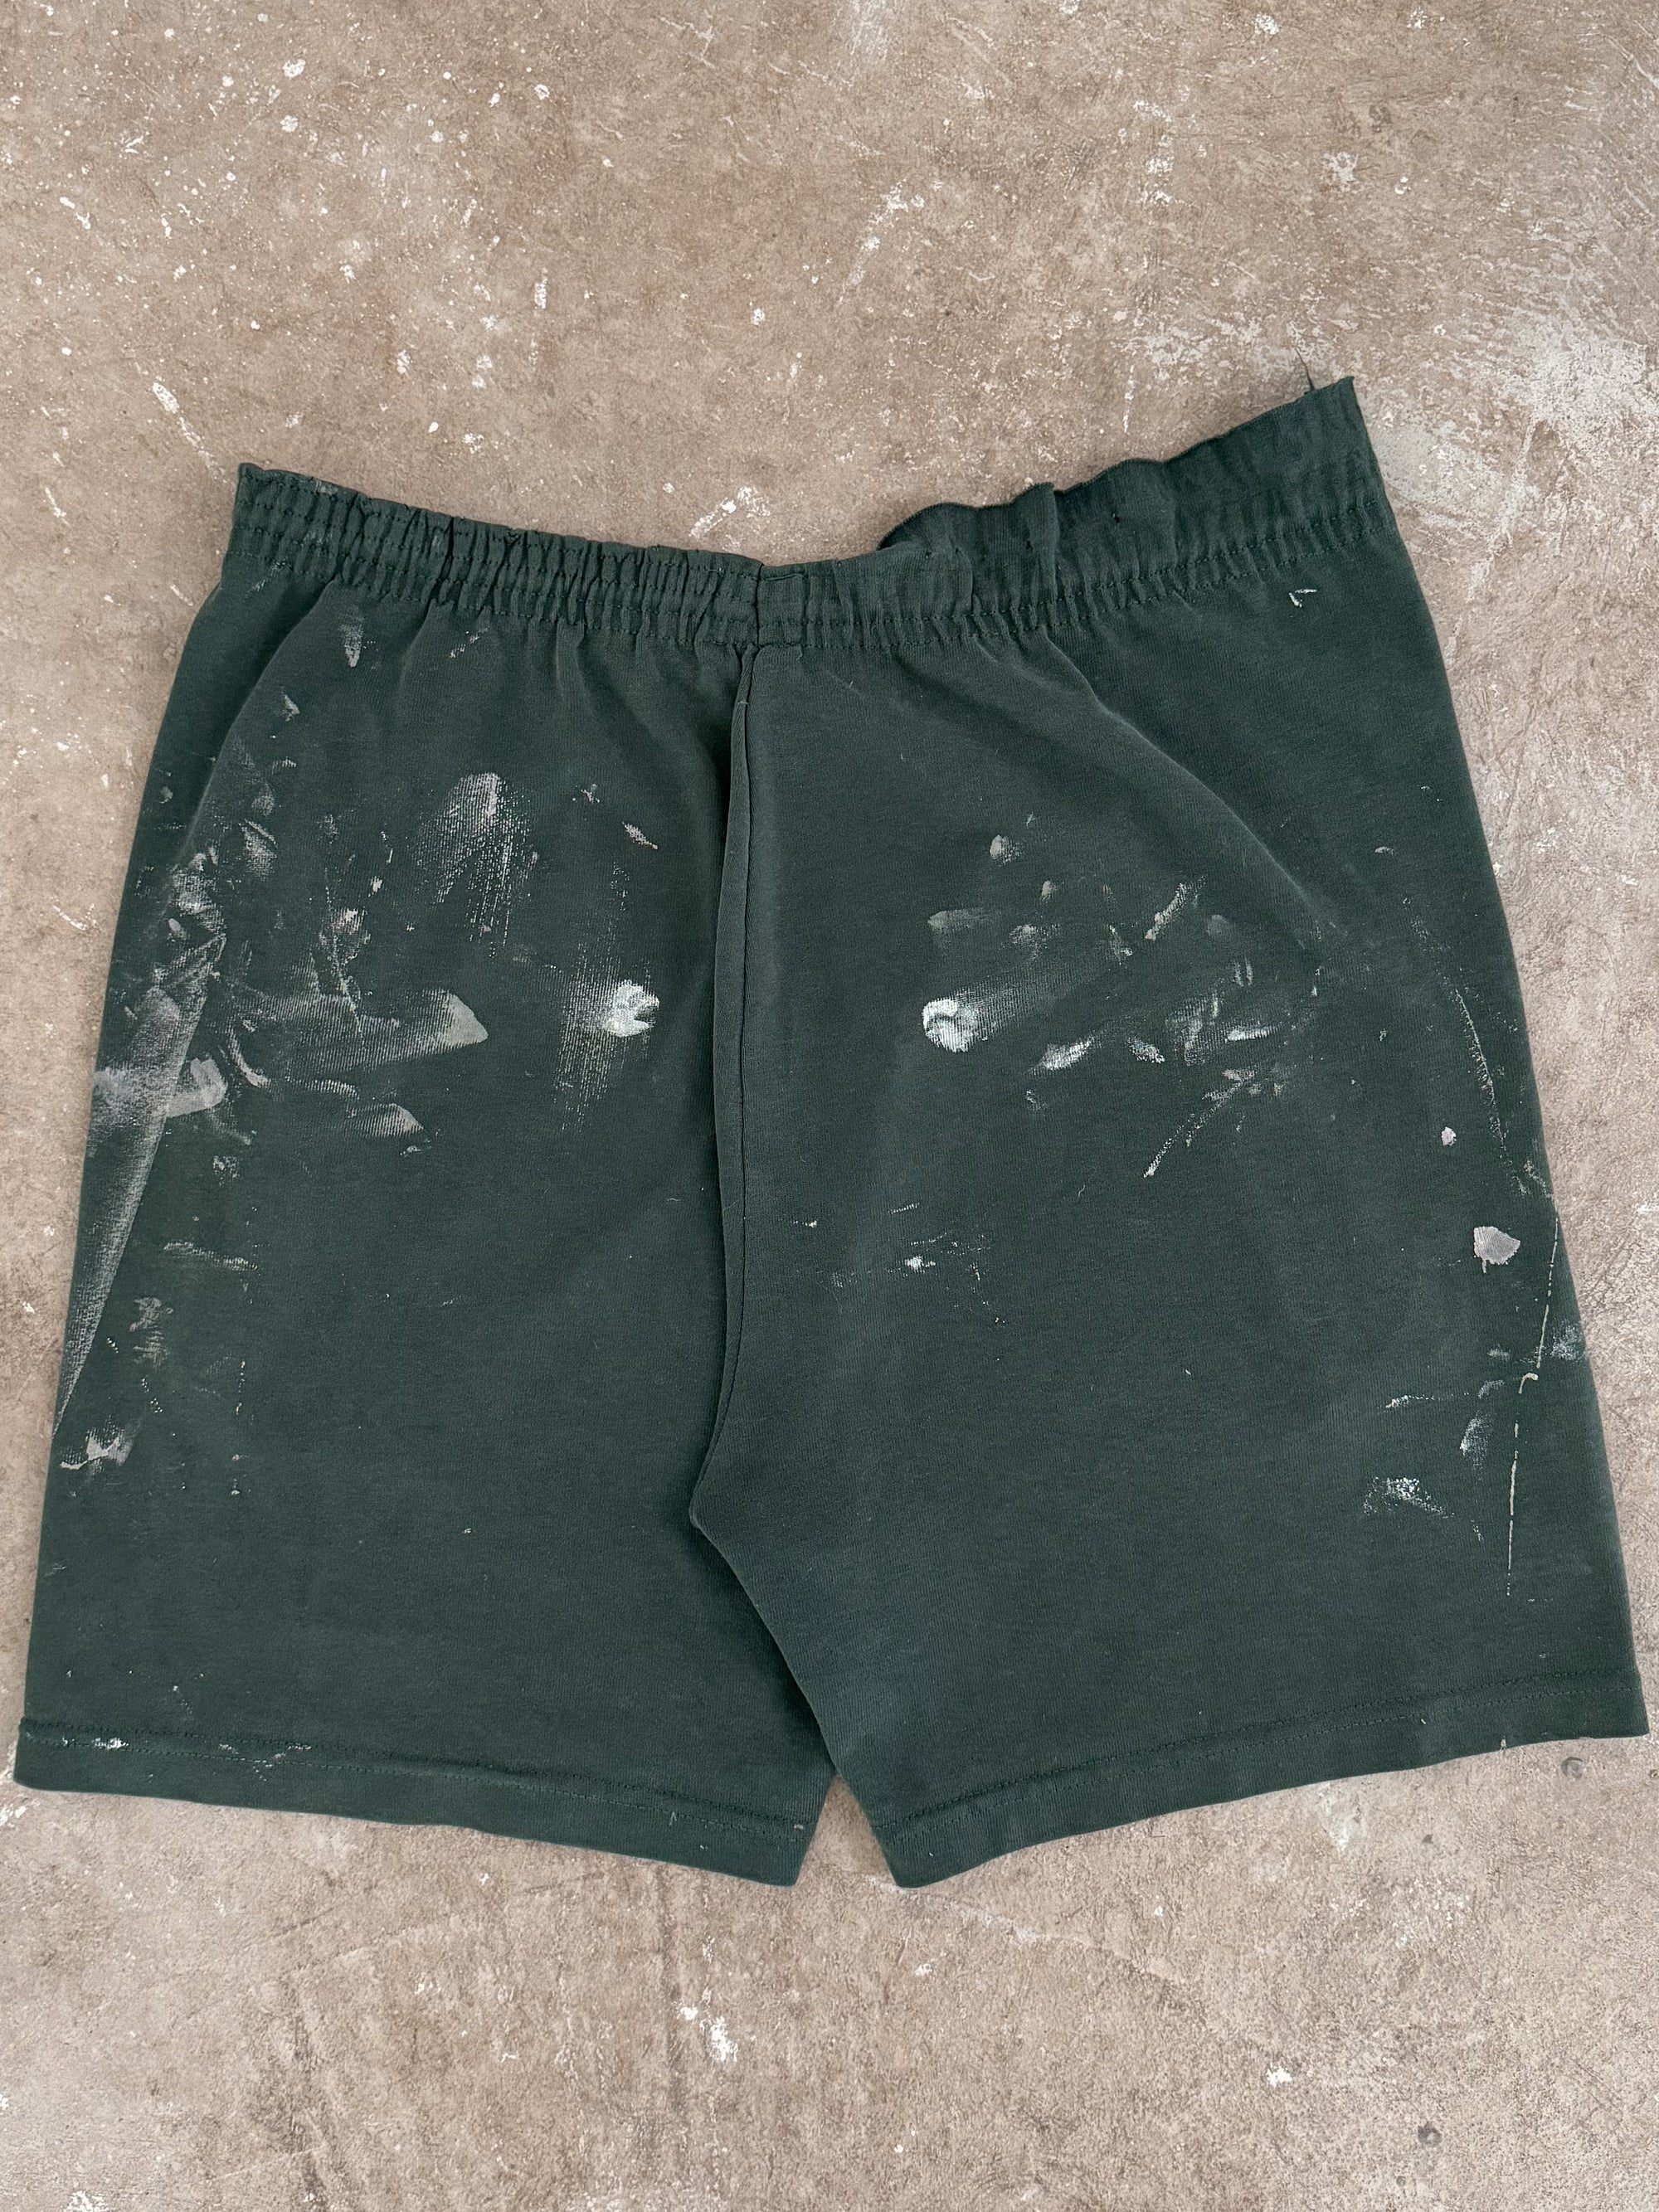 1980s Champion Painted Green Sweat Shorts (M)